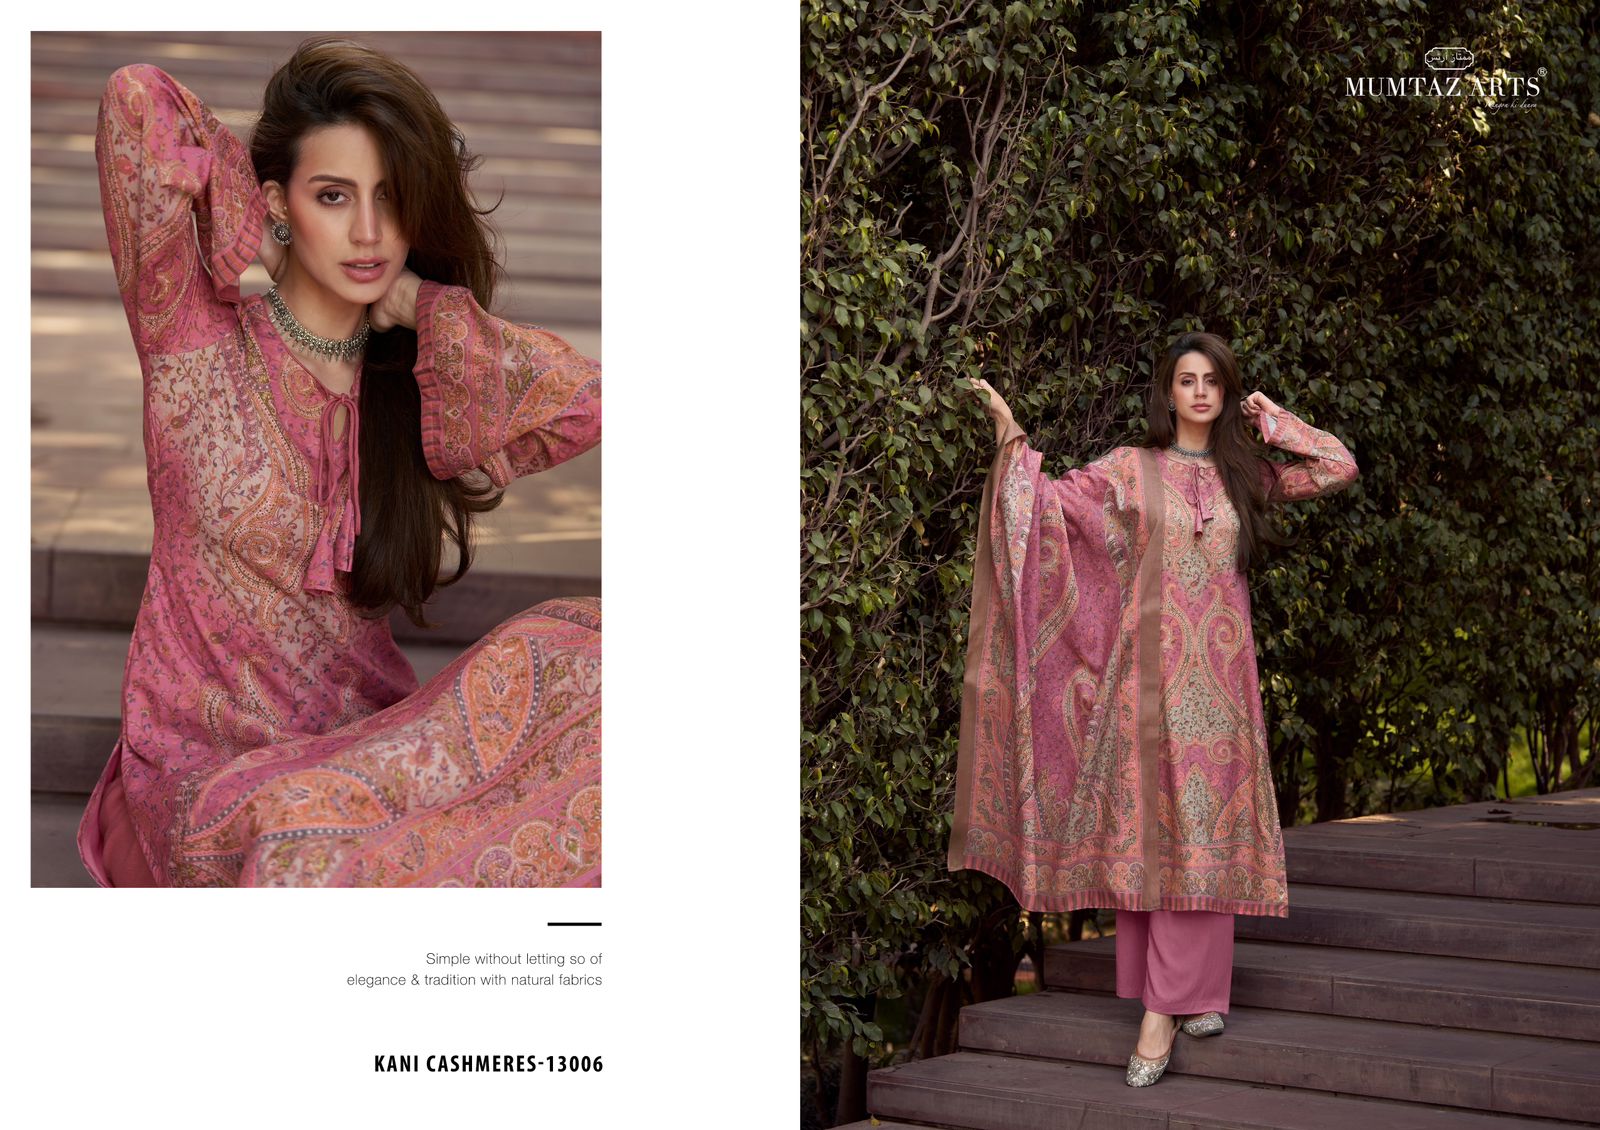 Mumtaz Arts Kani Cashmeres Vol 2 Lawn Cotton Digital Printed Dress Material Latest Collection